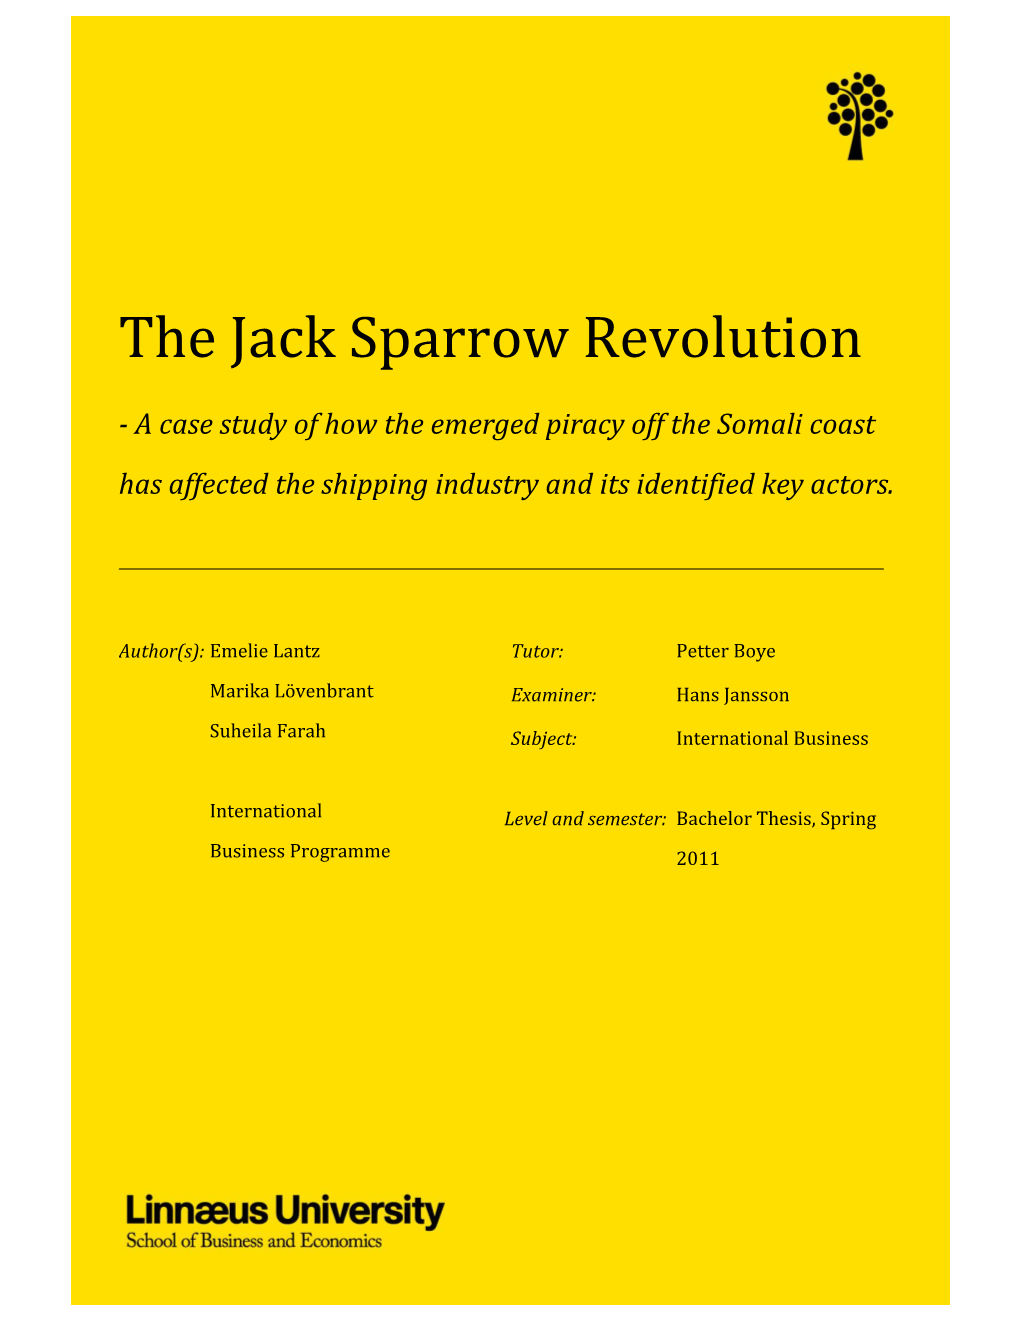 The Jack Sparrow Revolution